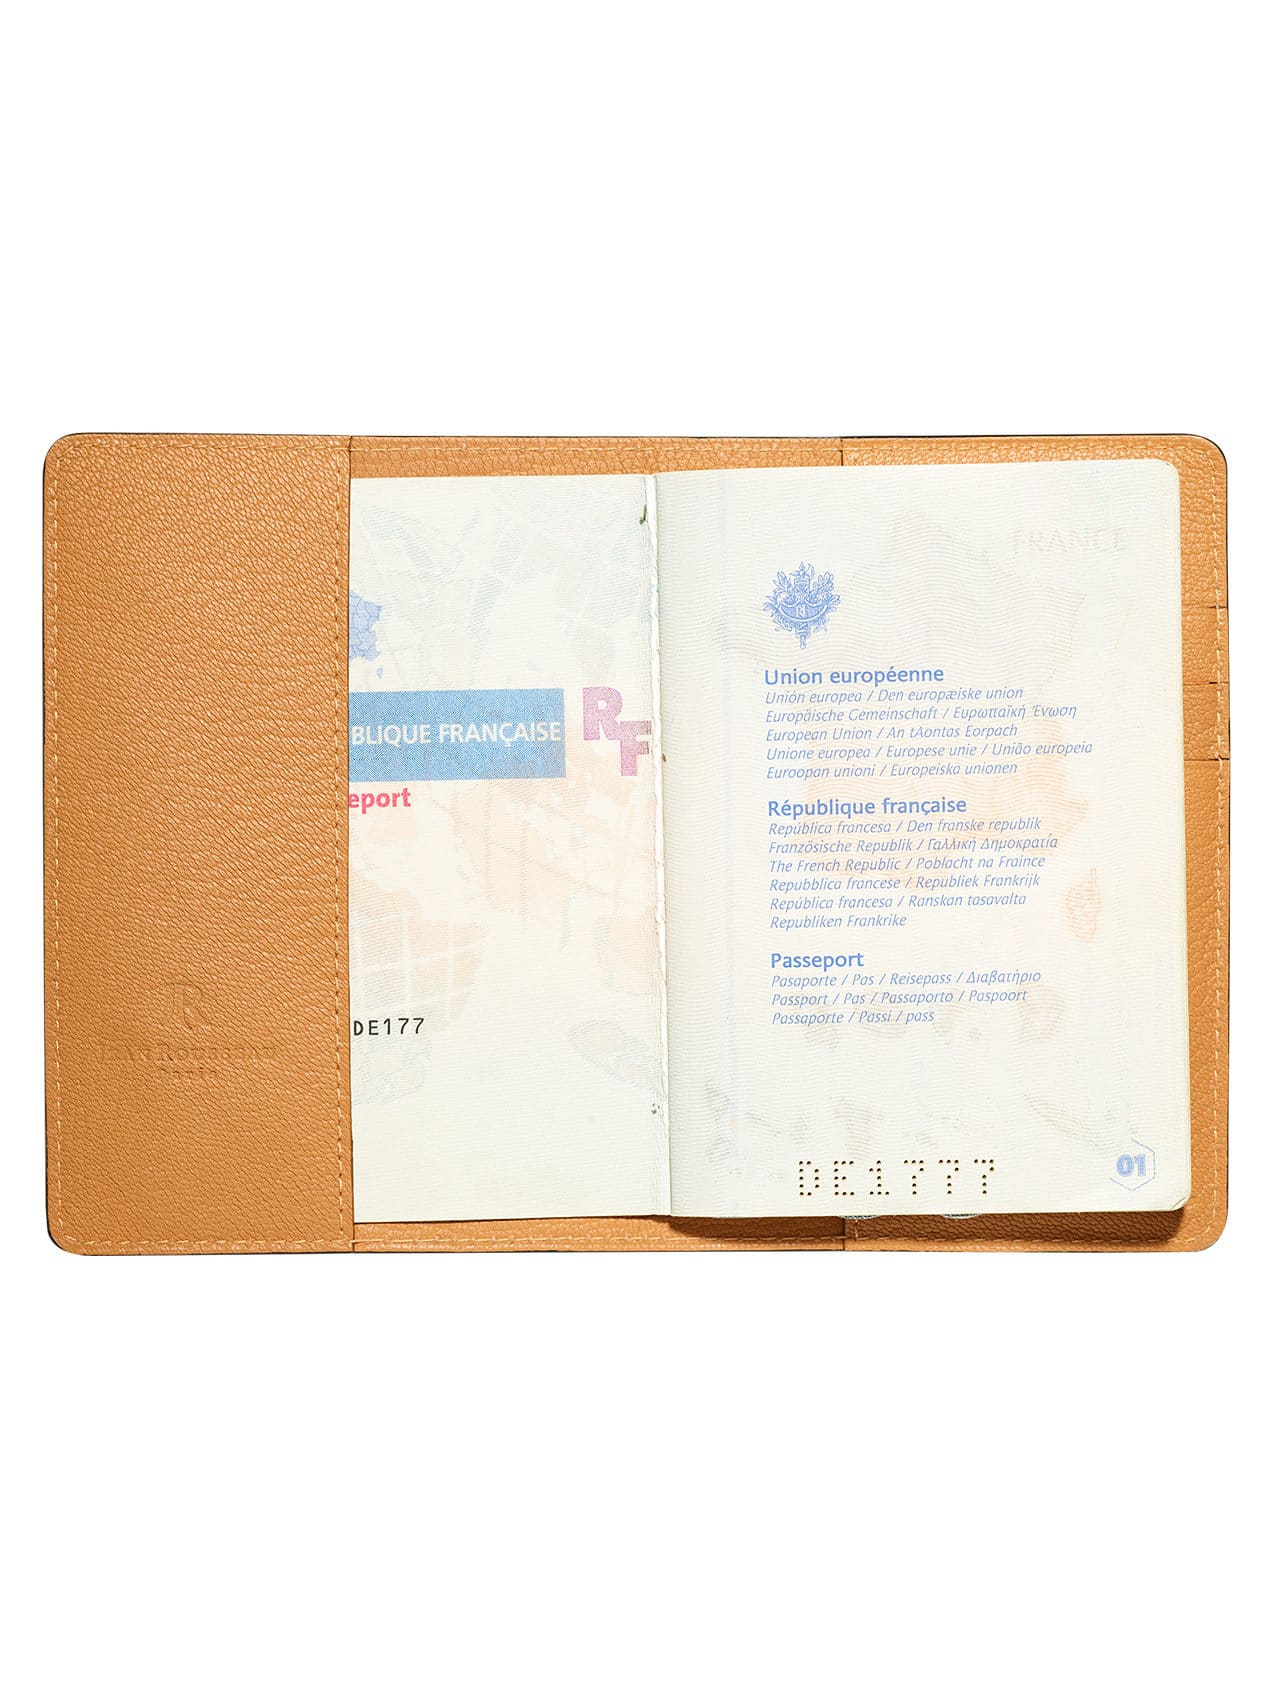 jean rousseau watch strap card holder passport yellow brown